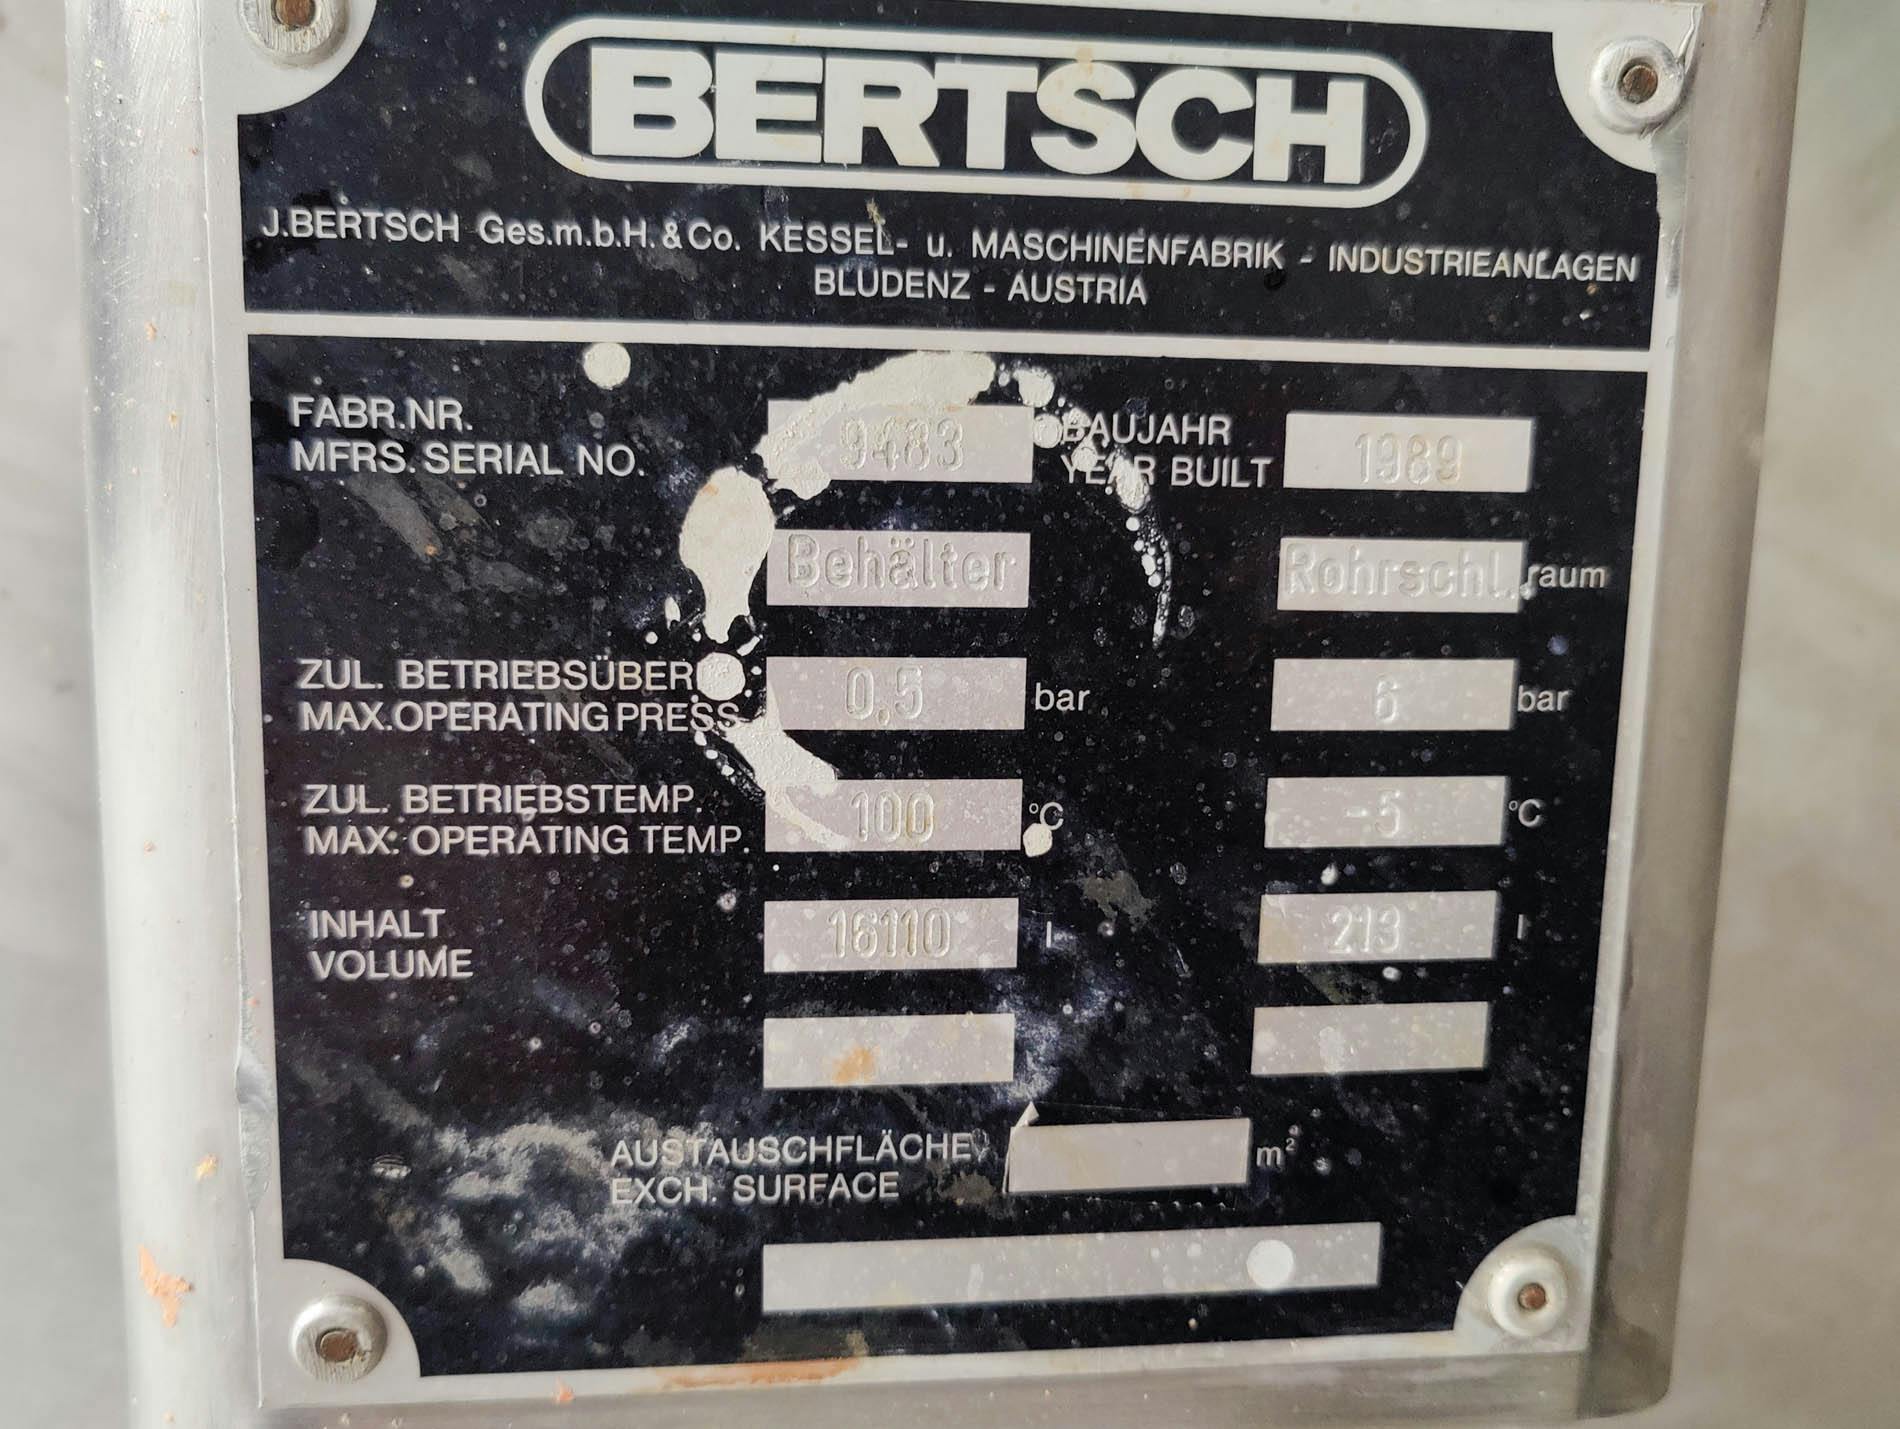 Bertsch 12500 Ltr. - Bioreactor - Stainless Steel Reactor - image 7